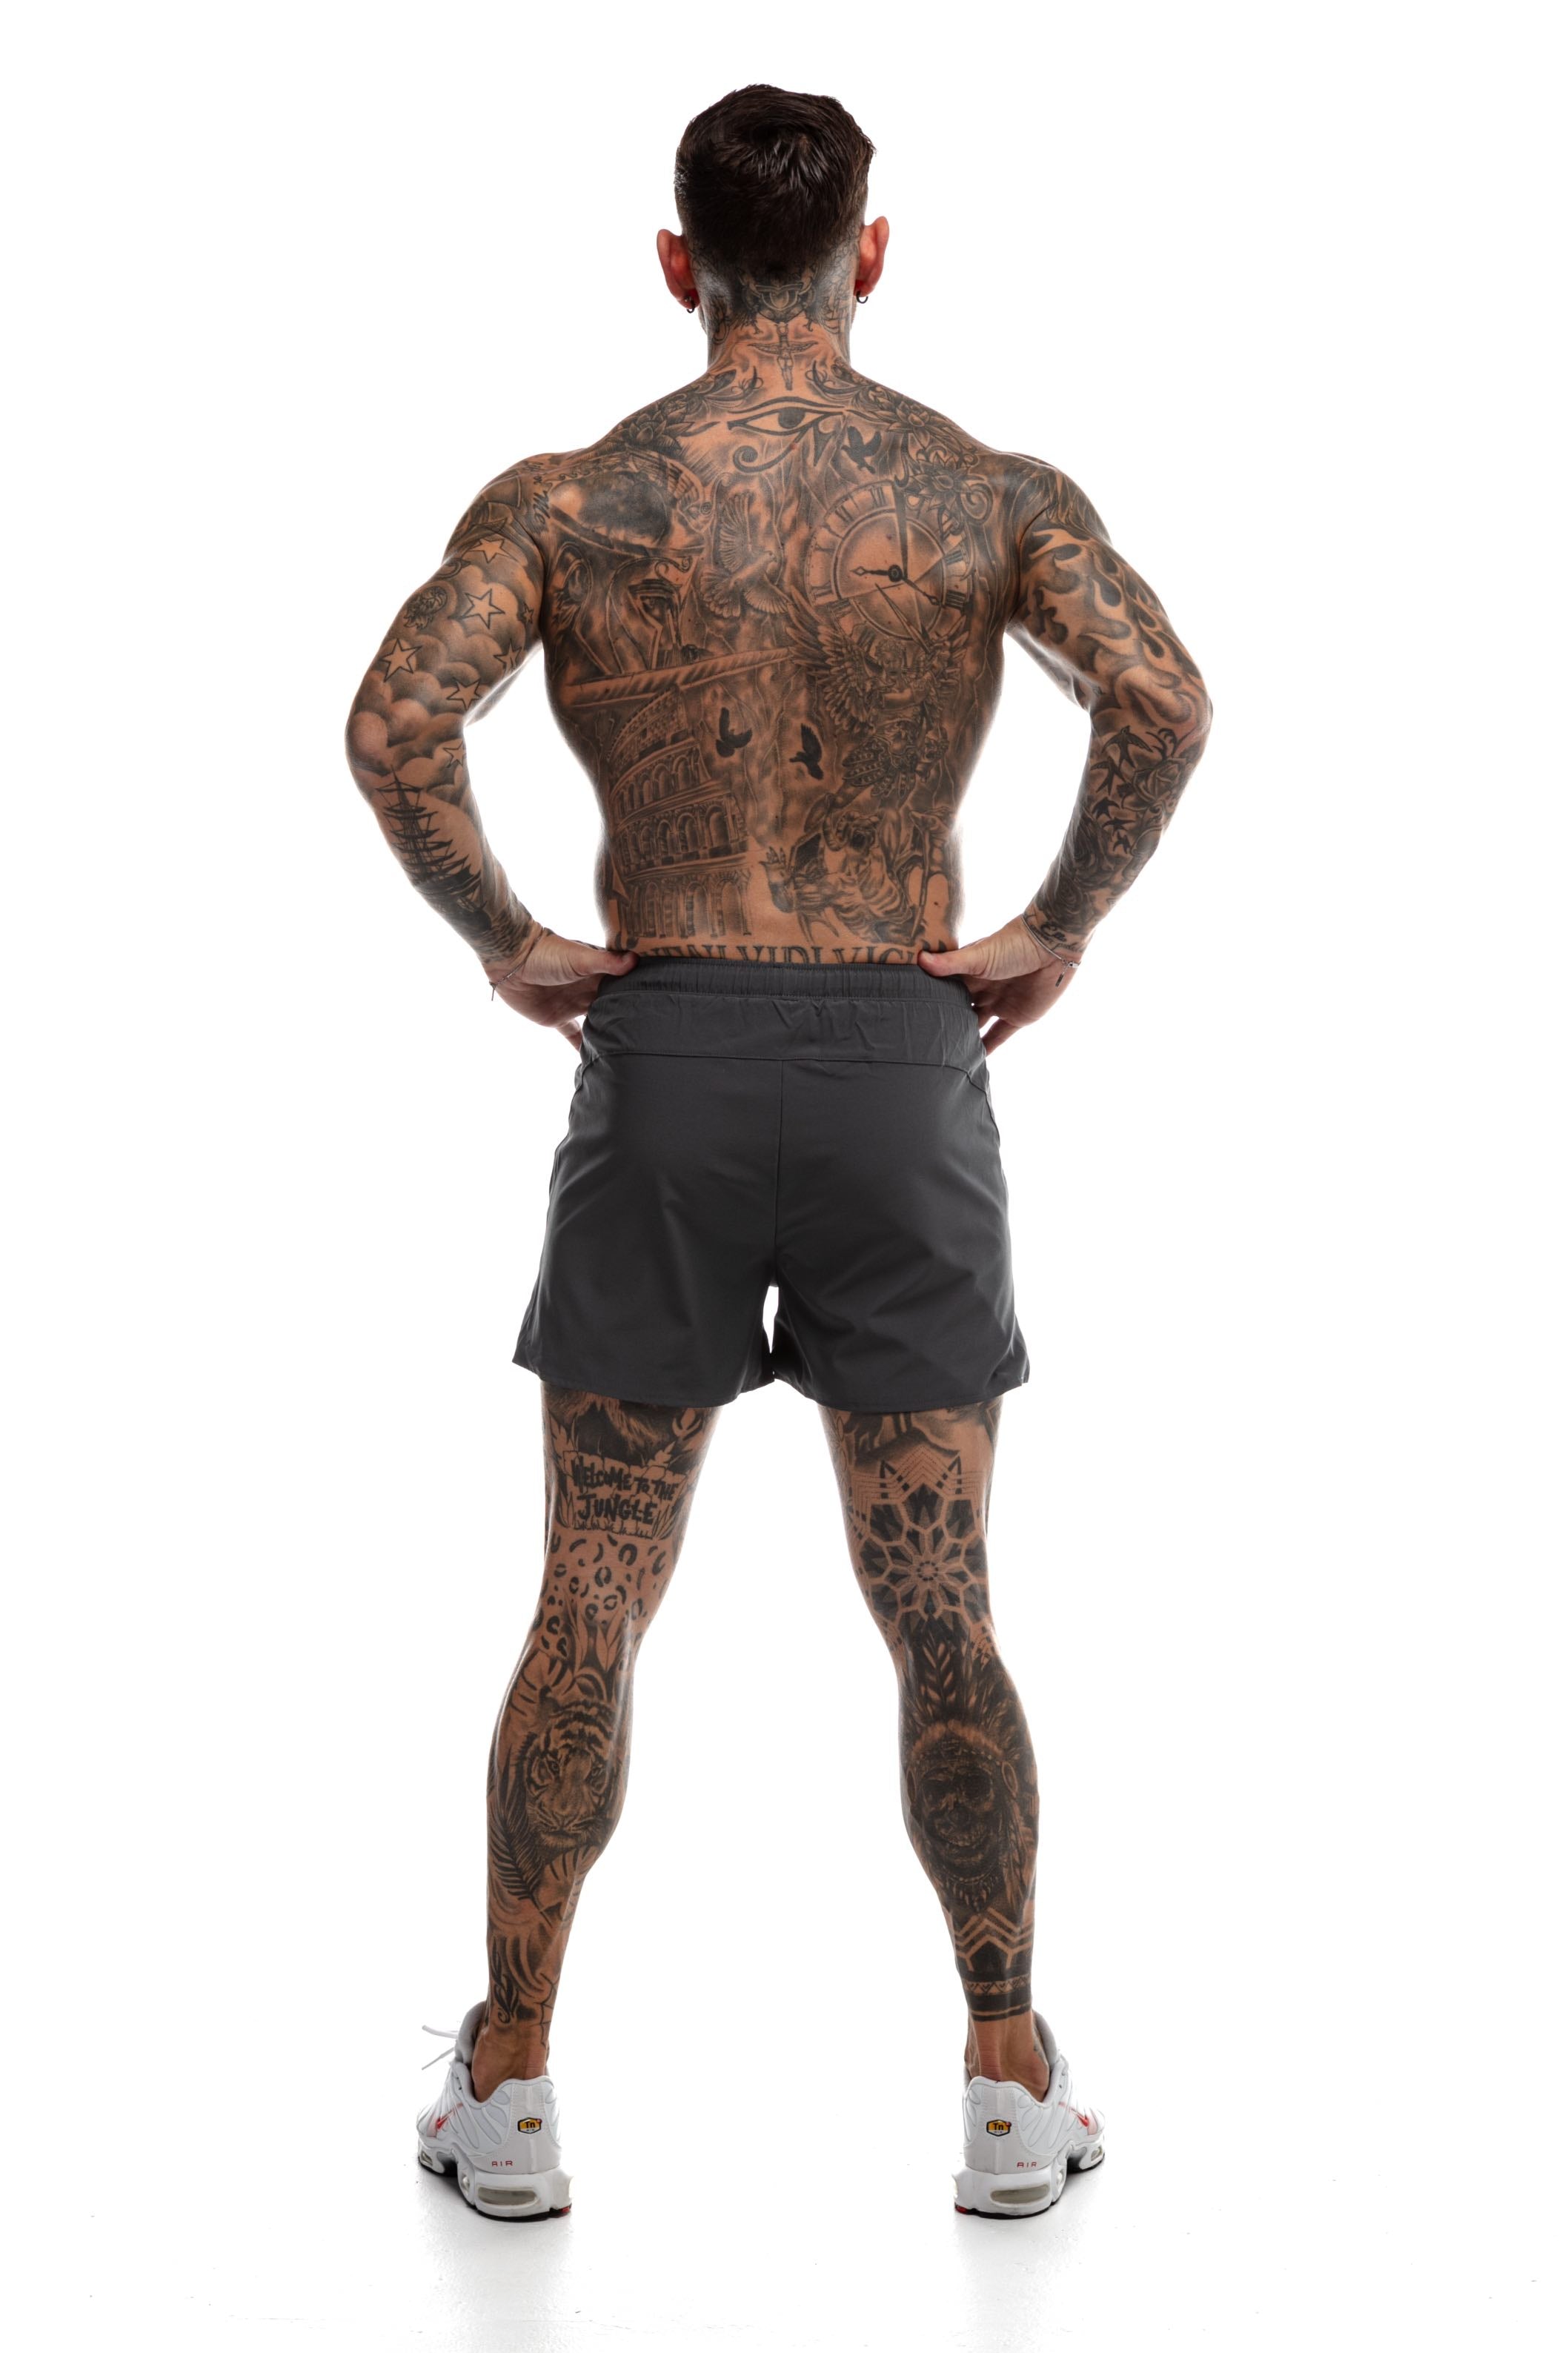 GymFreak Mens Fusion Shorts - Charcoal- 3.5 inch